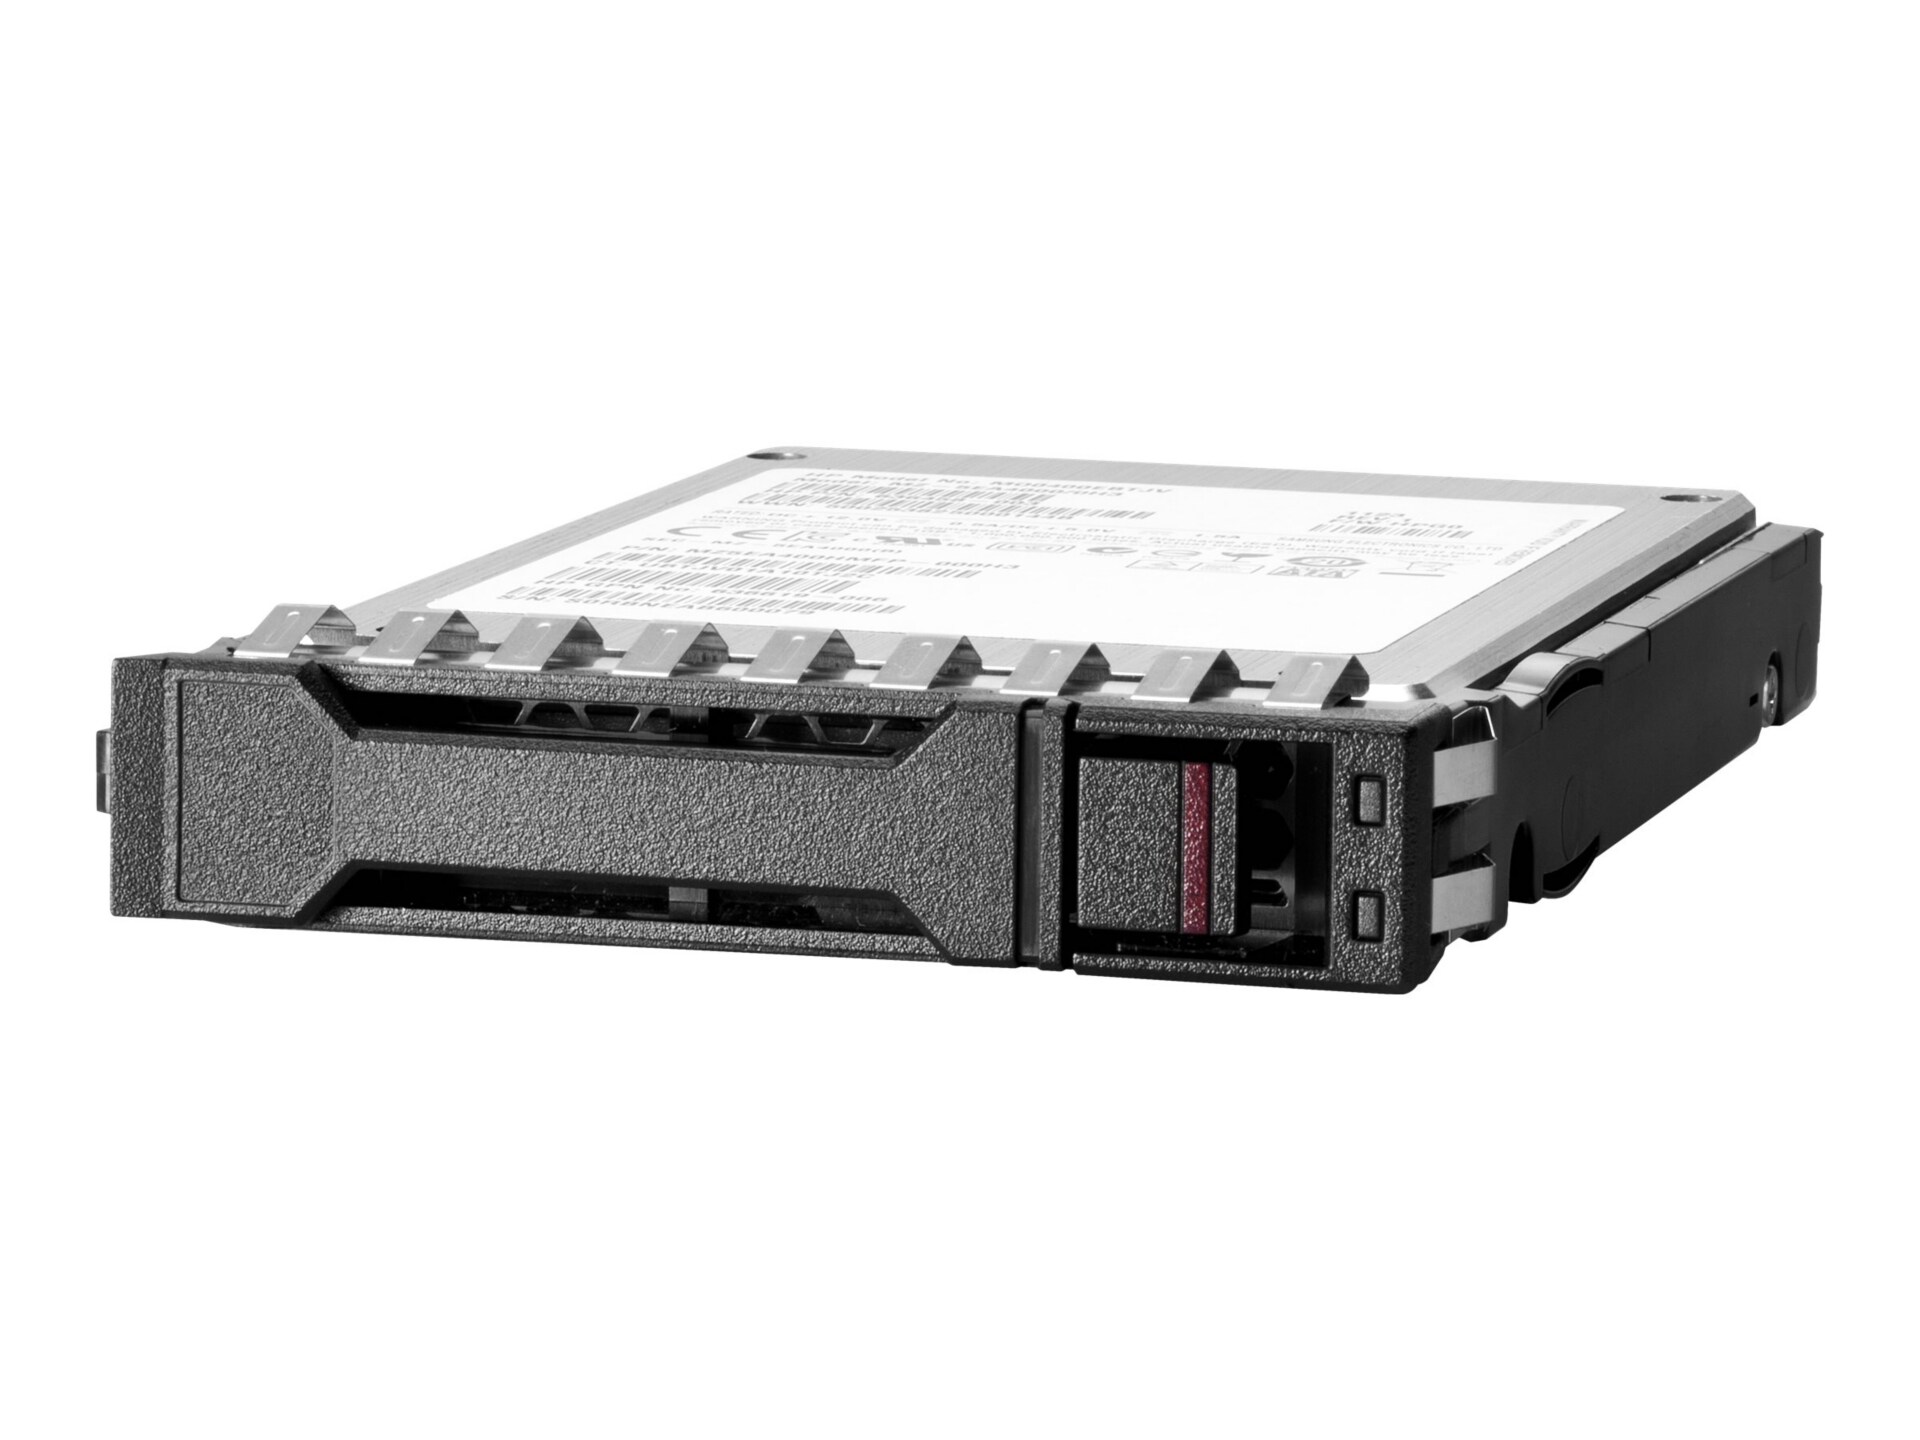 HPE PM897 - SSD - Mixed Use - 1.92 TB - SATA 6Gb/s